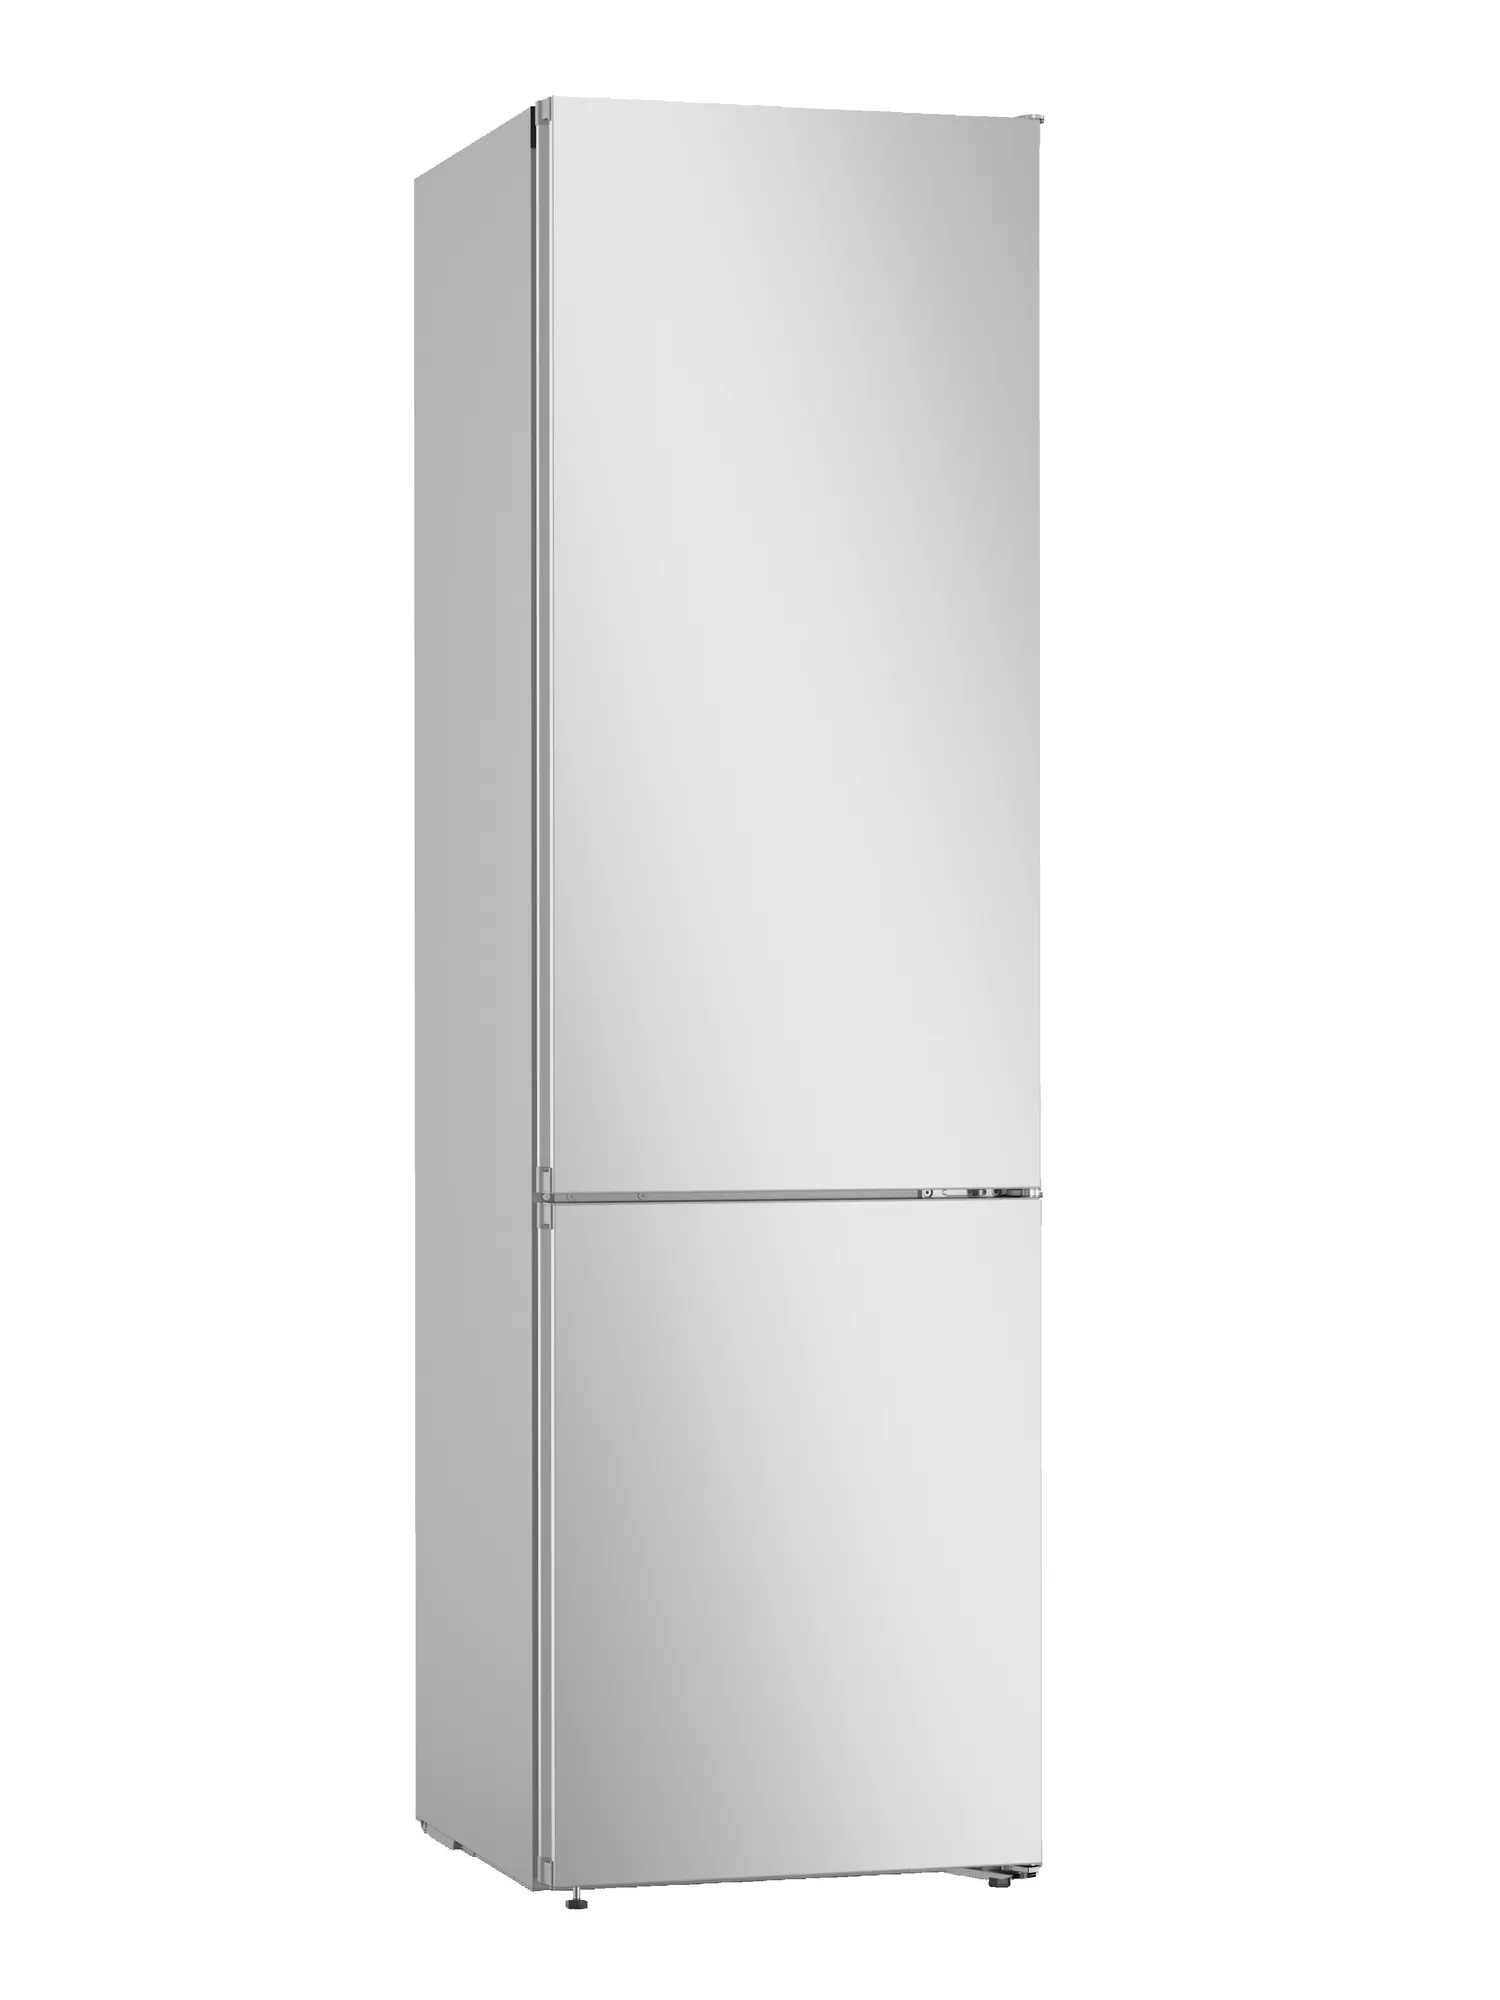 Холодильник двухкамерный купить в днс. Холодильник korting KNFC 62017 GW. Bosch kgn39ij22r. Холодильник Bosch kgn39. Холодильник бош 22r.